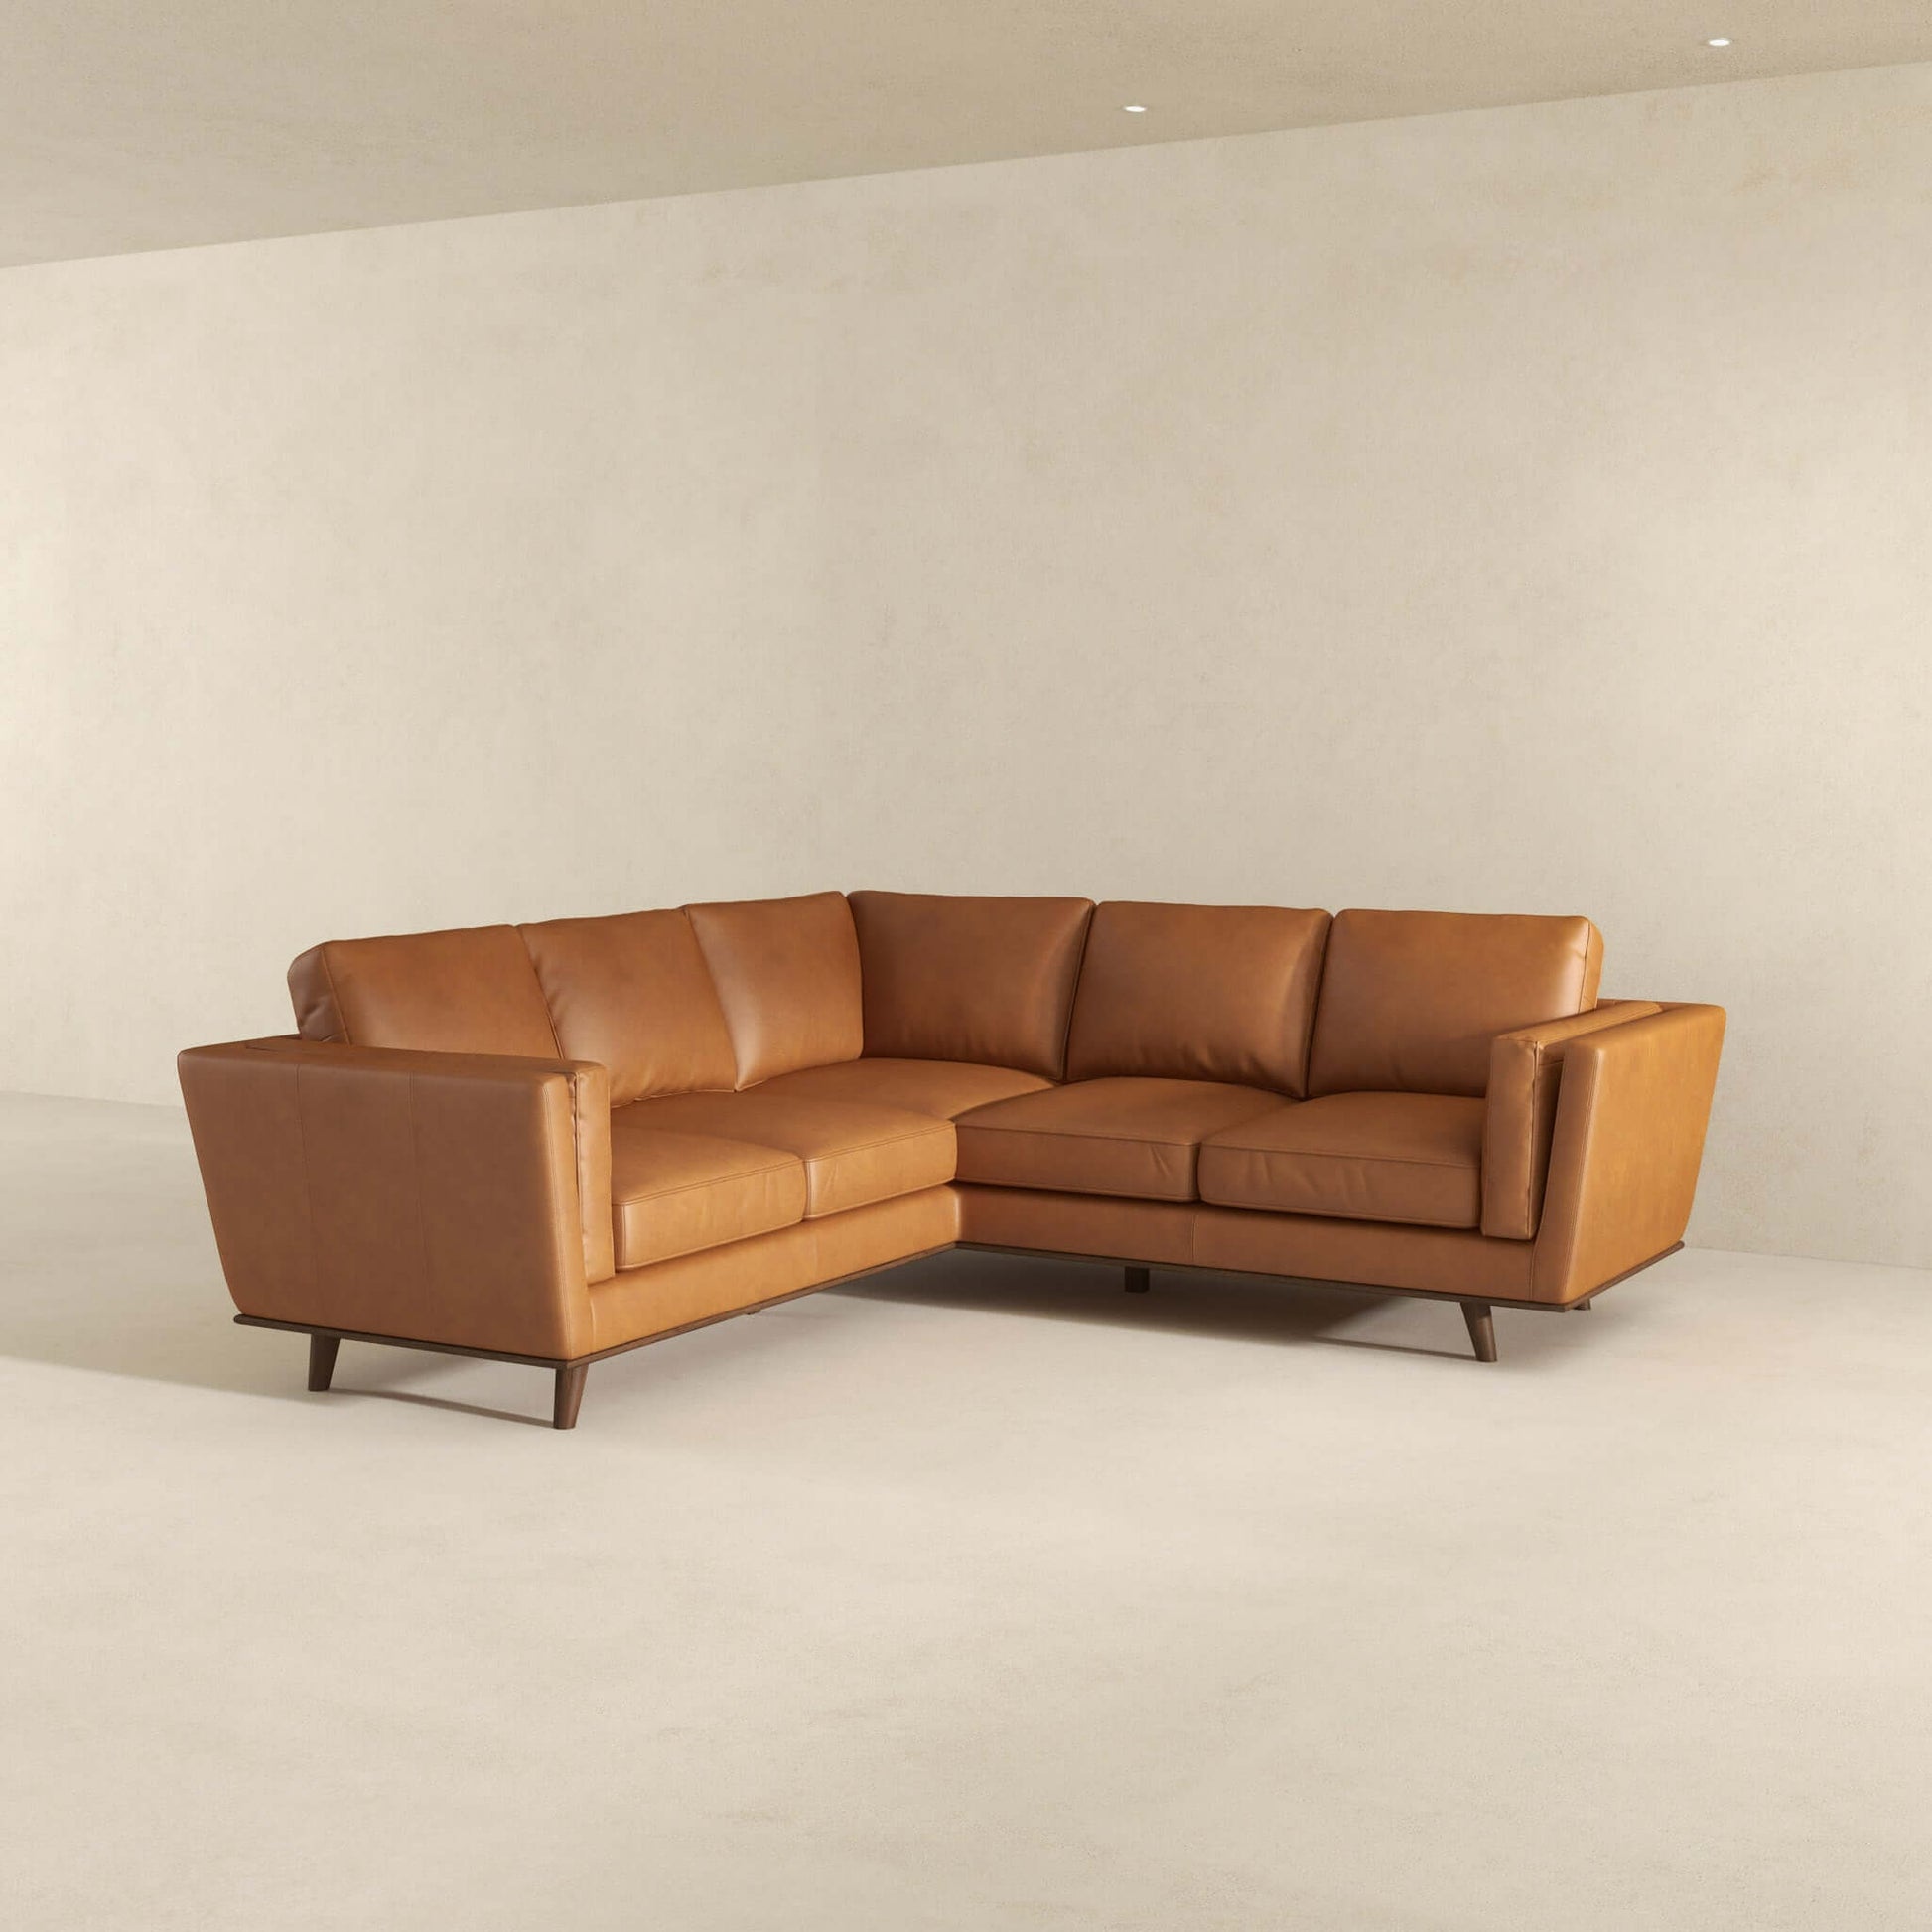 Ashcroft Furniture Co Farsah Mid Century Modern Tan Leather Corner Sofa